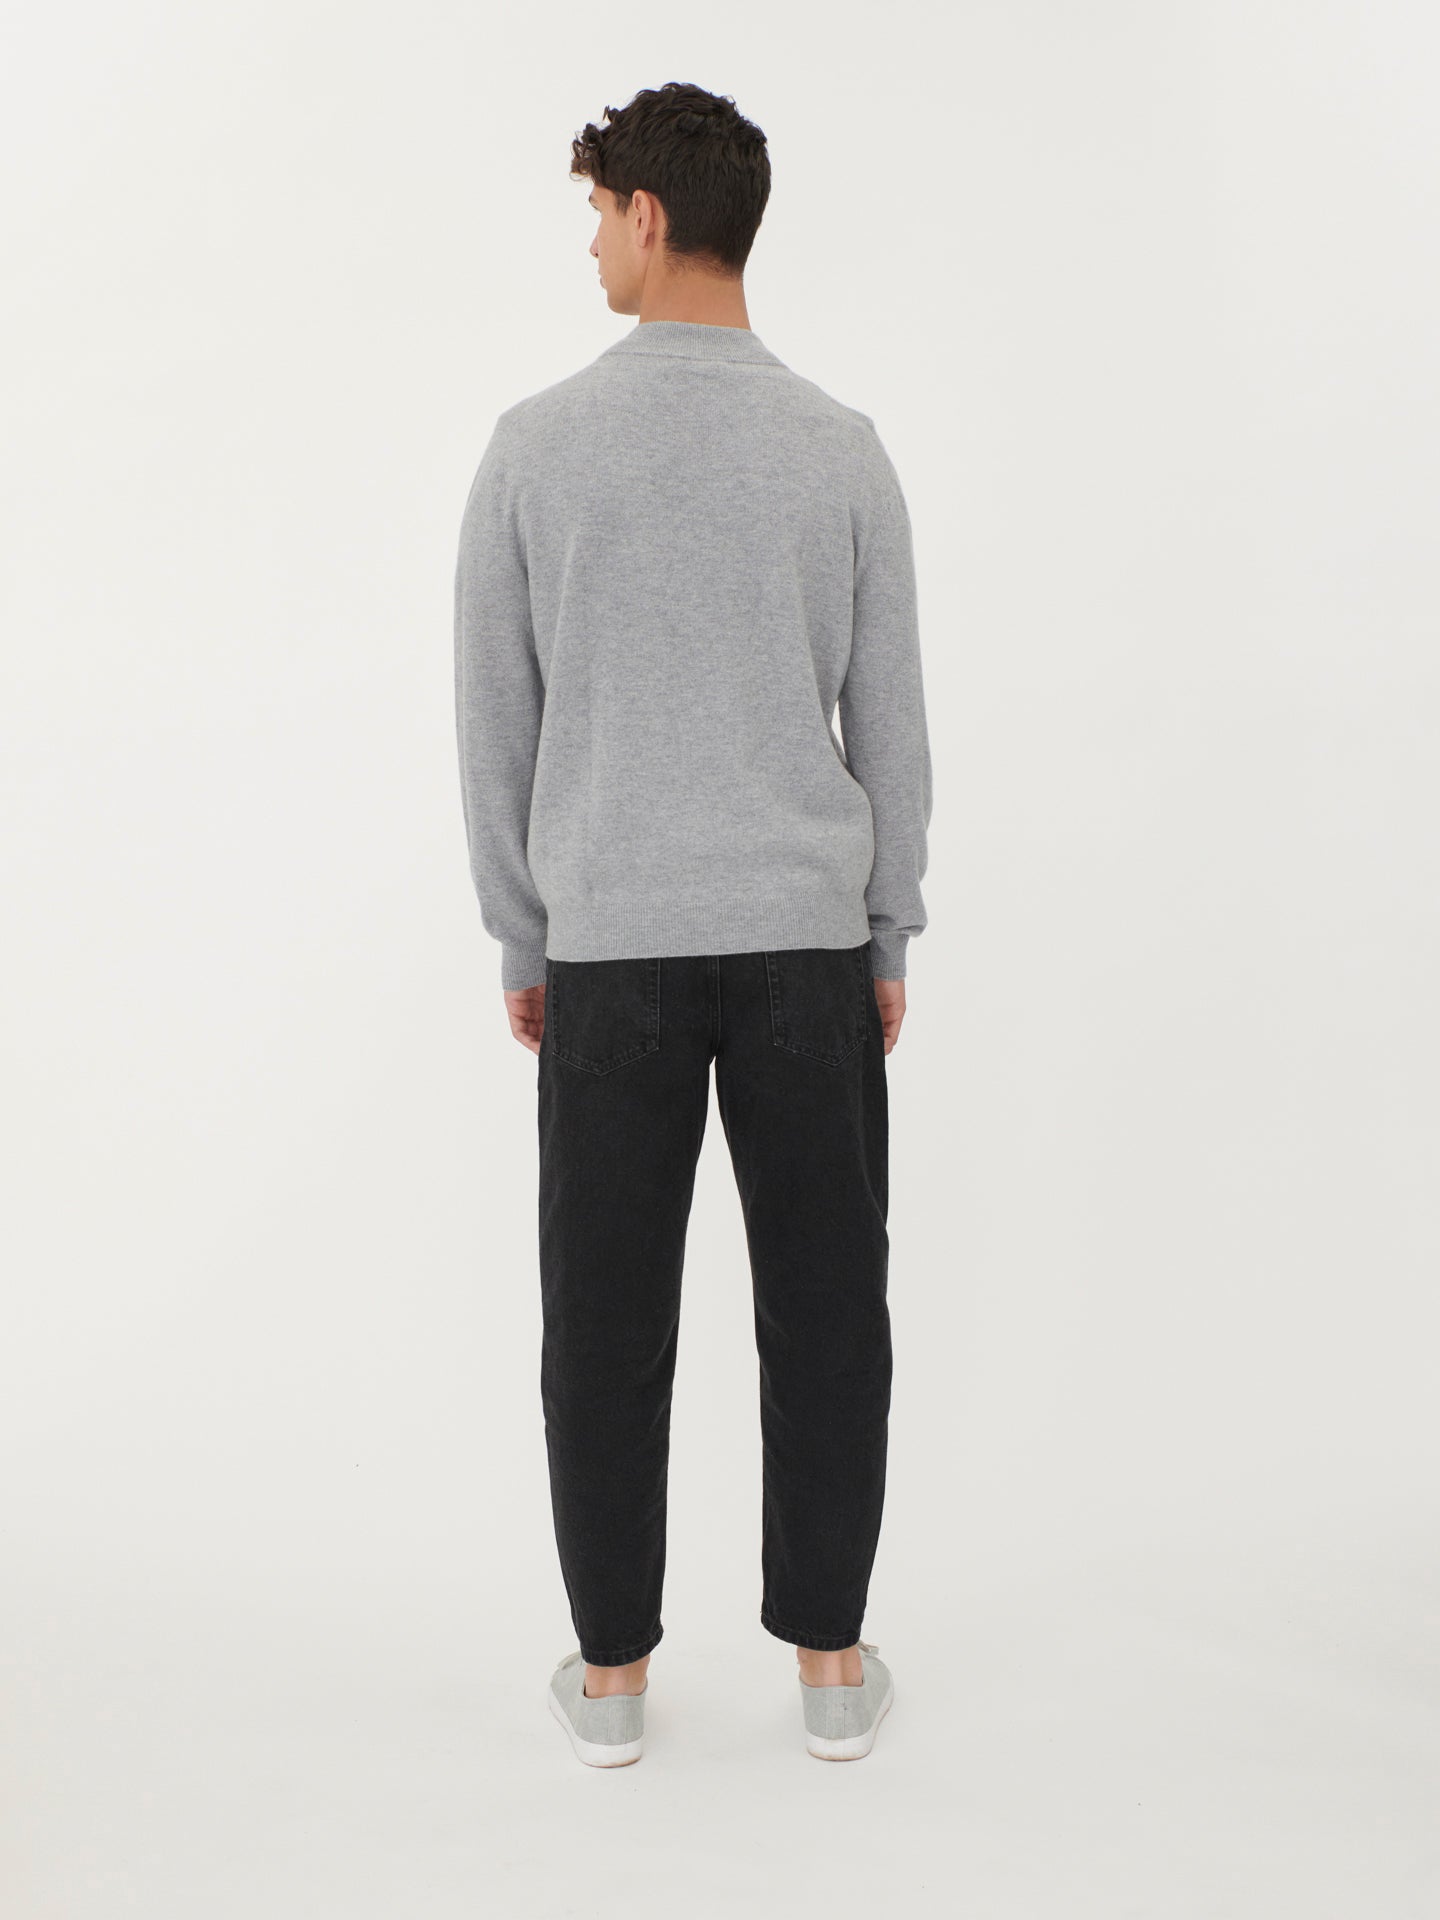 Men's Cashmere Half Zip Sweater Light Gray - Gobi Cashmere